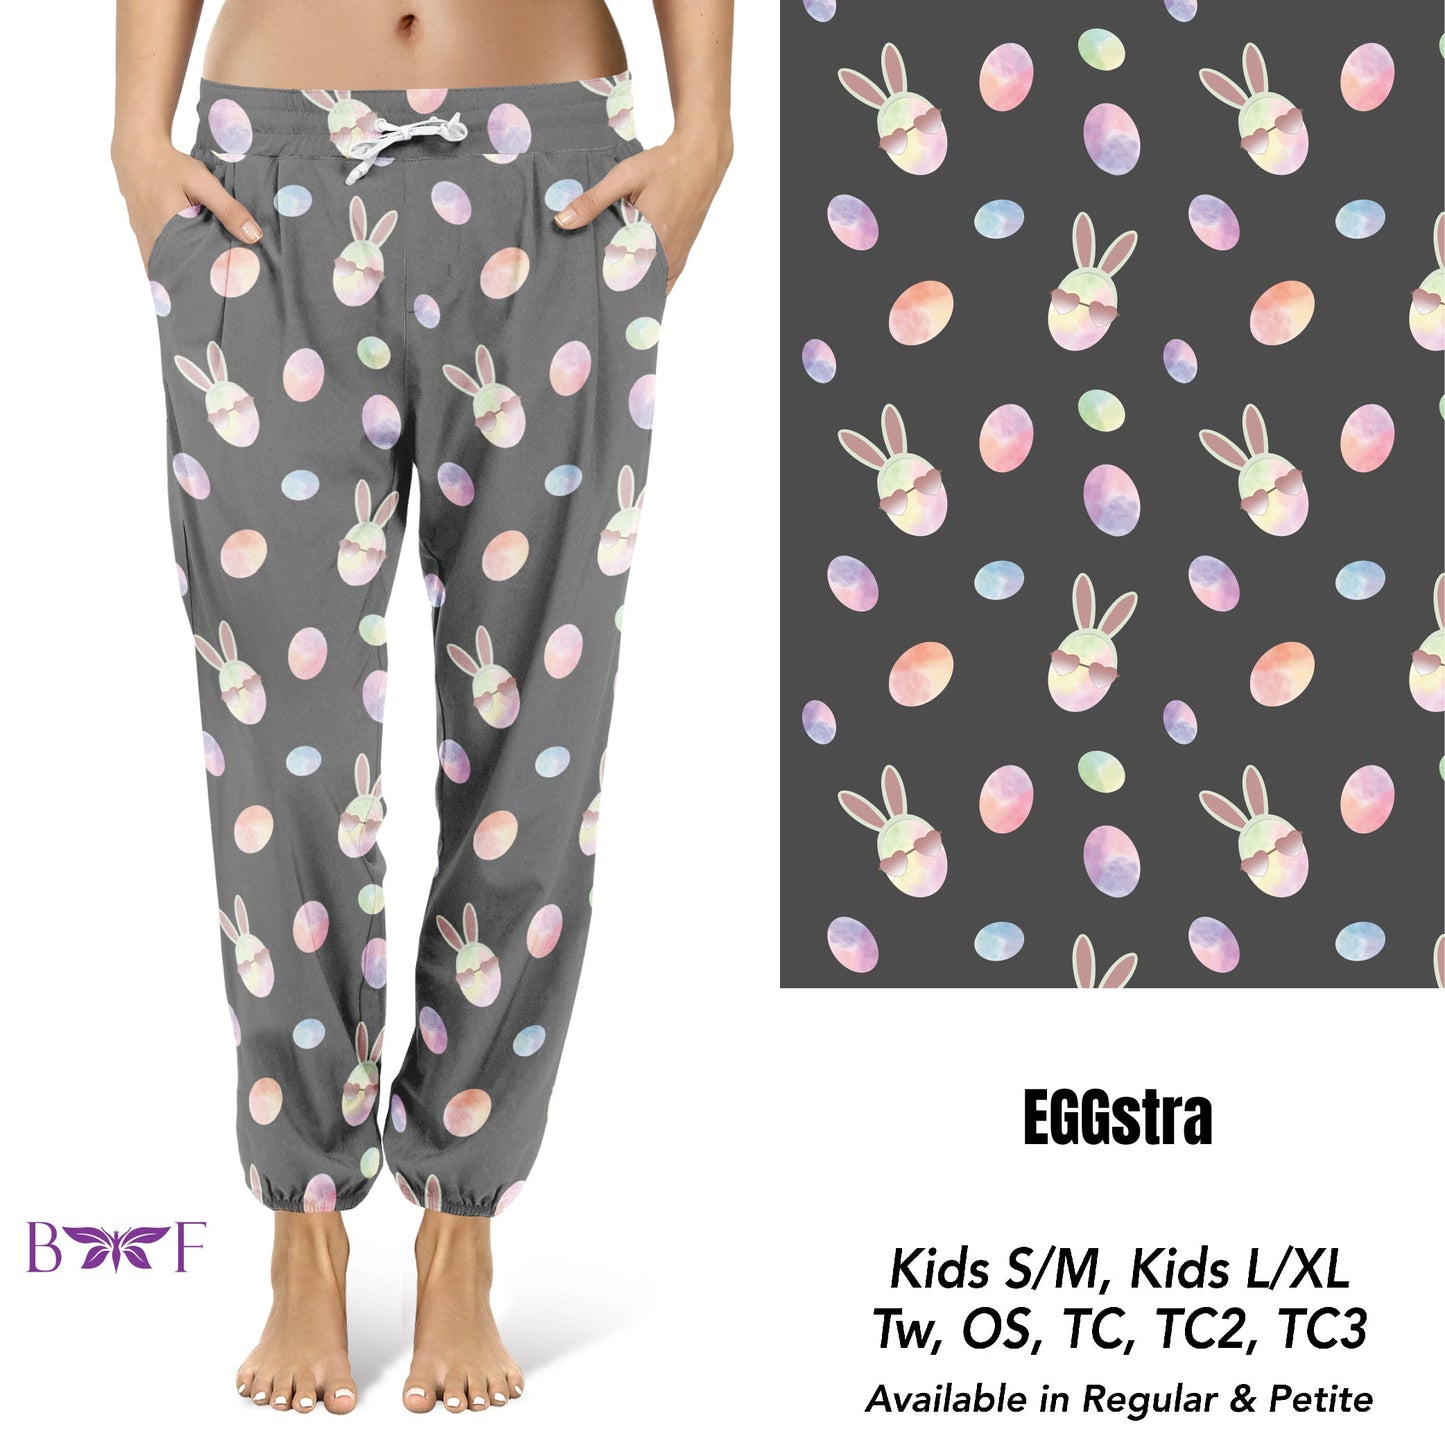 EGGstra leggings with pockets